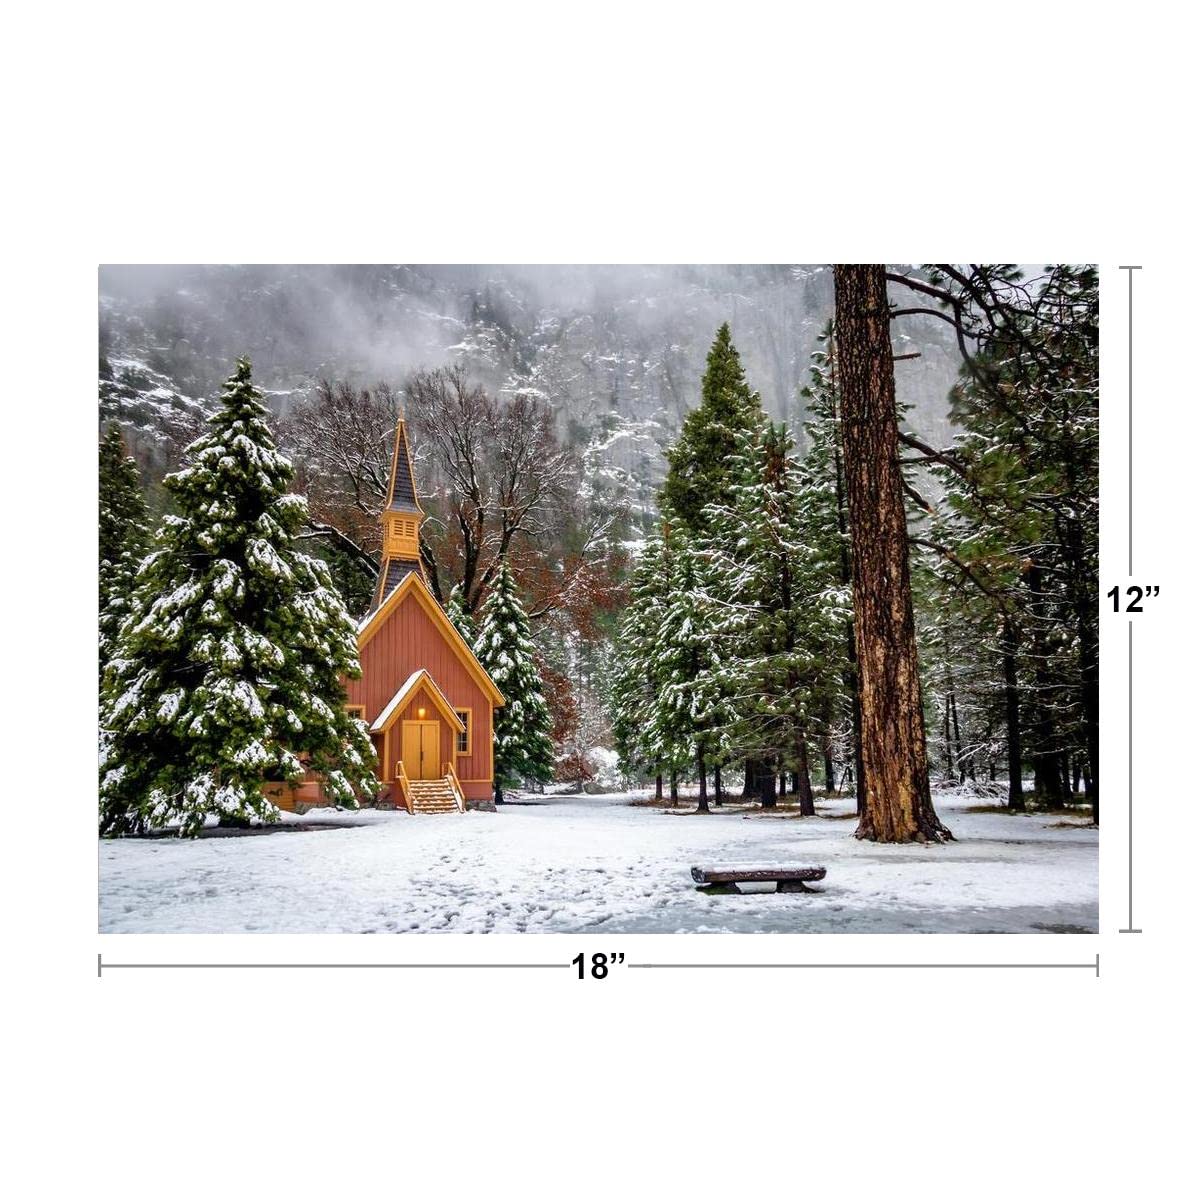 Yosemite Valley Chapel in Winter Yosemite National Park Photo Photograph Cool Wall Decor Art Print Poster 18x12